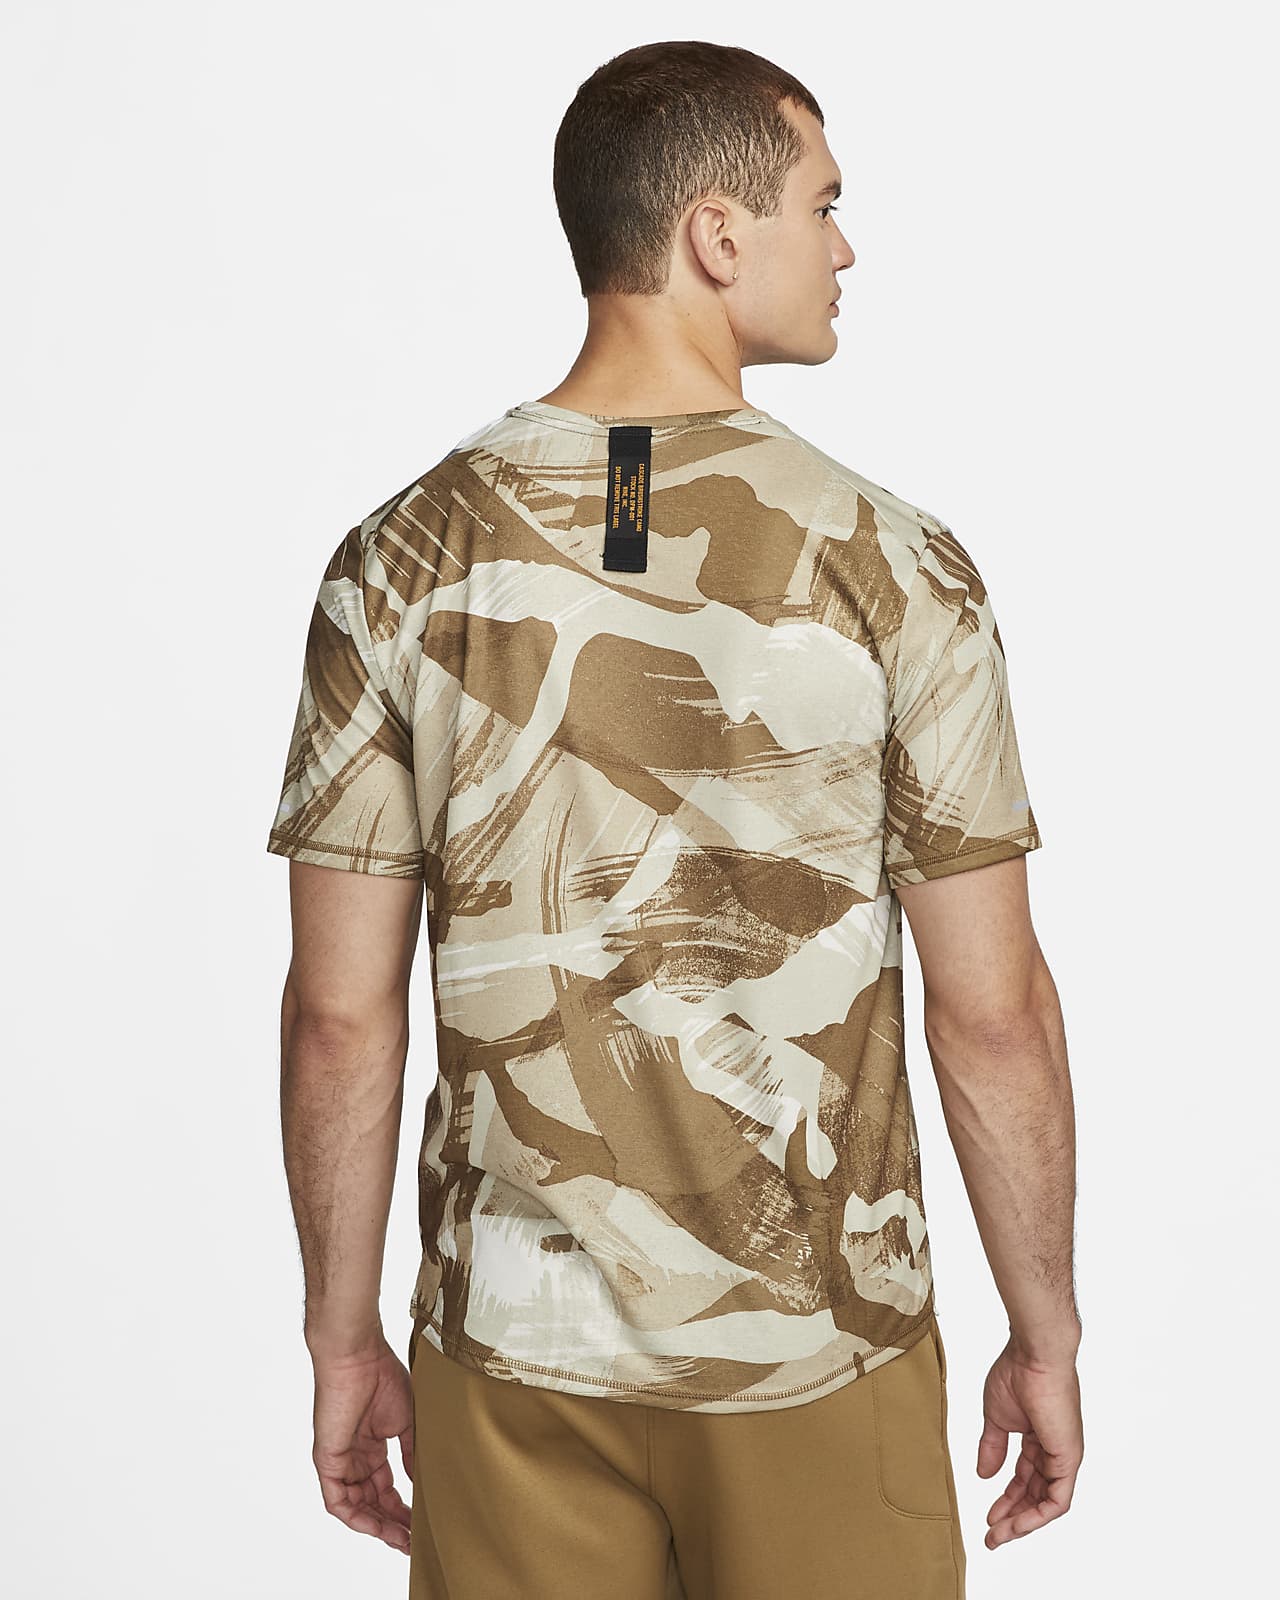 Dri-FIT Camiseta de running de manga corta con camuflaje - Hombre. Nike ES